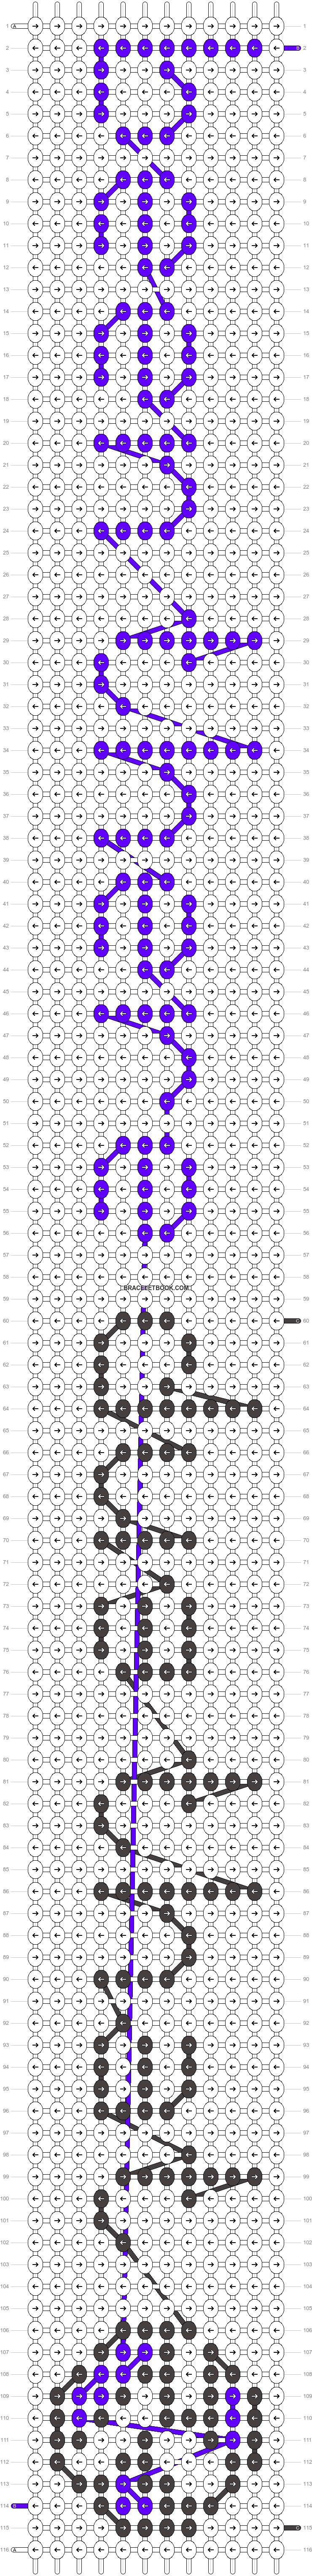 Alpha pattern #13062 pattern